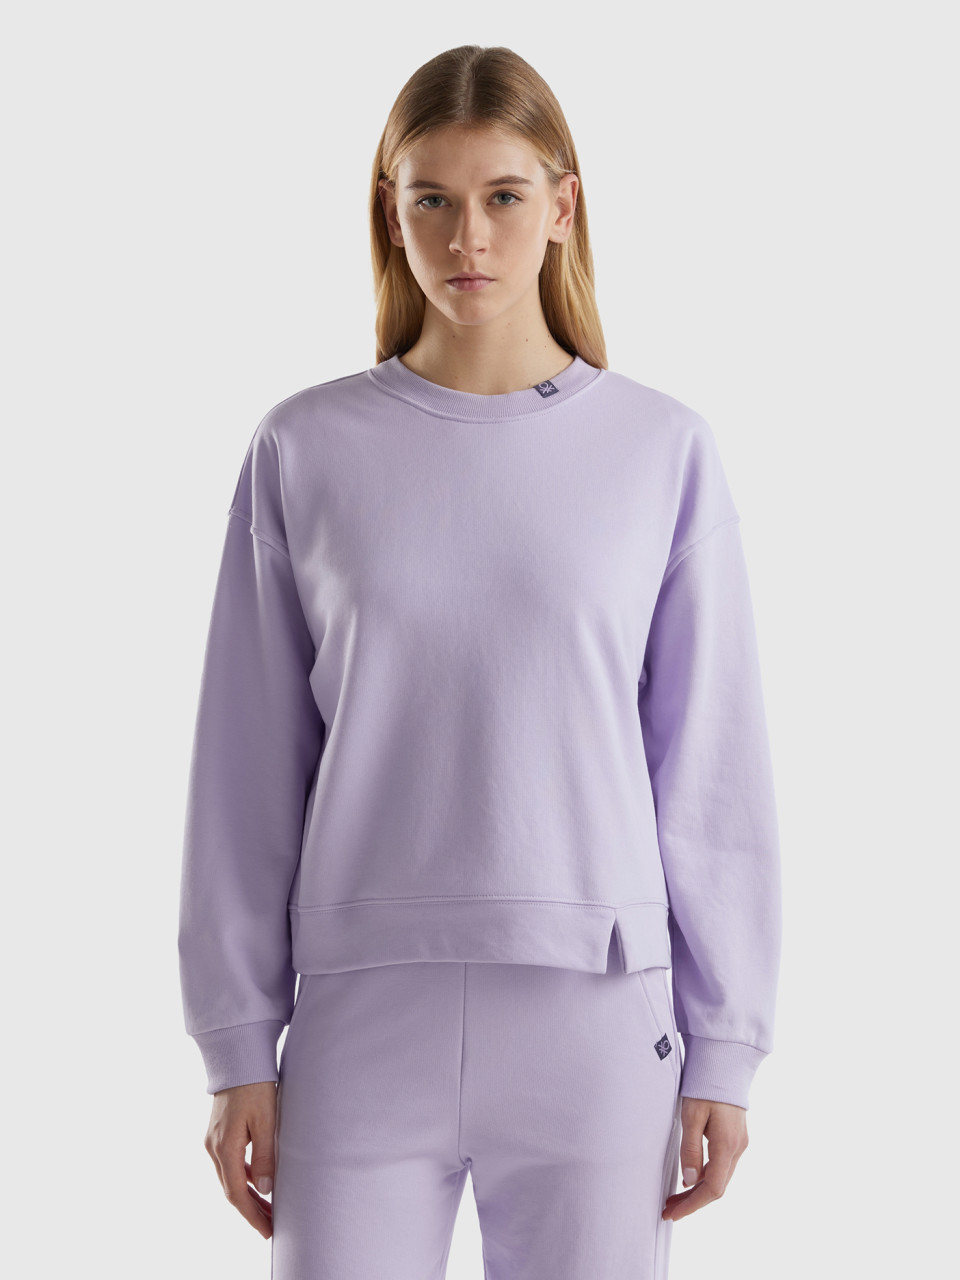 Benetton, Pullover Sweatshirt In Cotton Blend, Lilac, Women